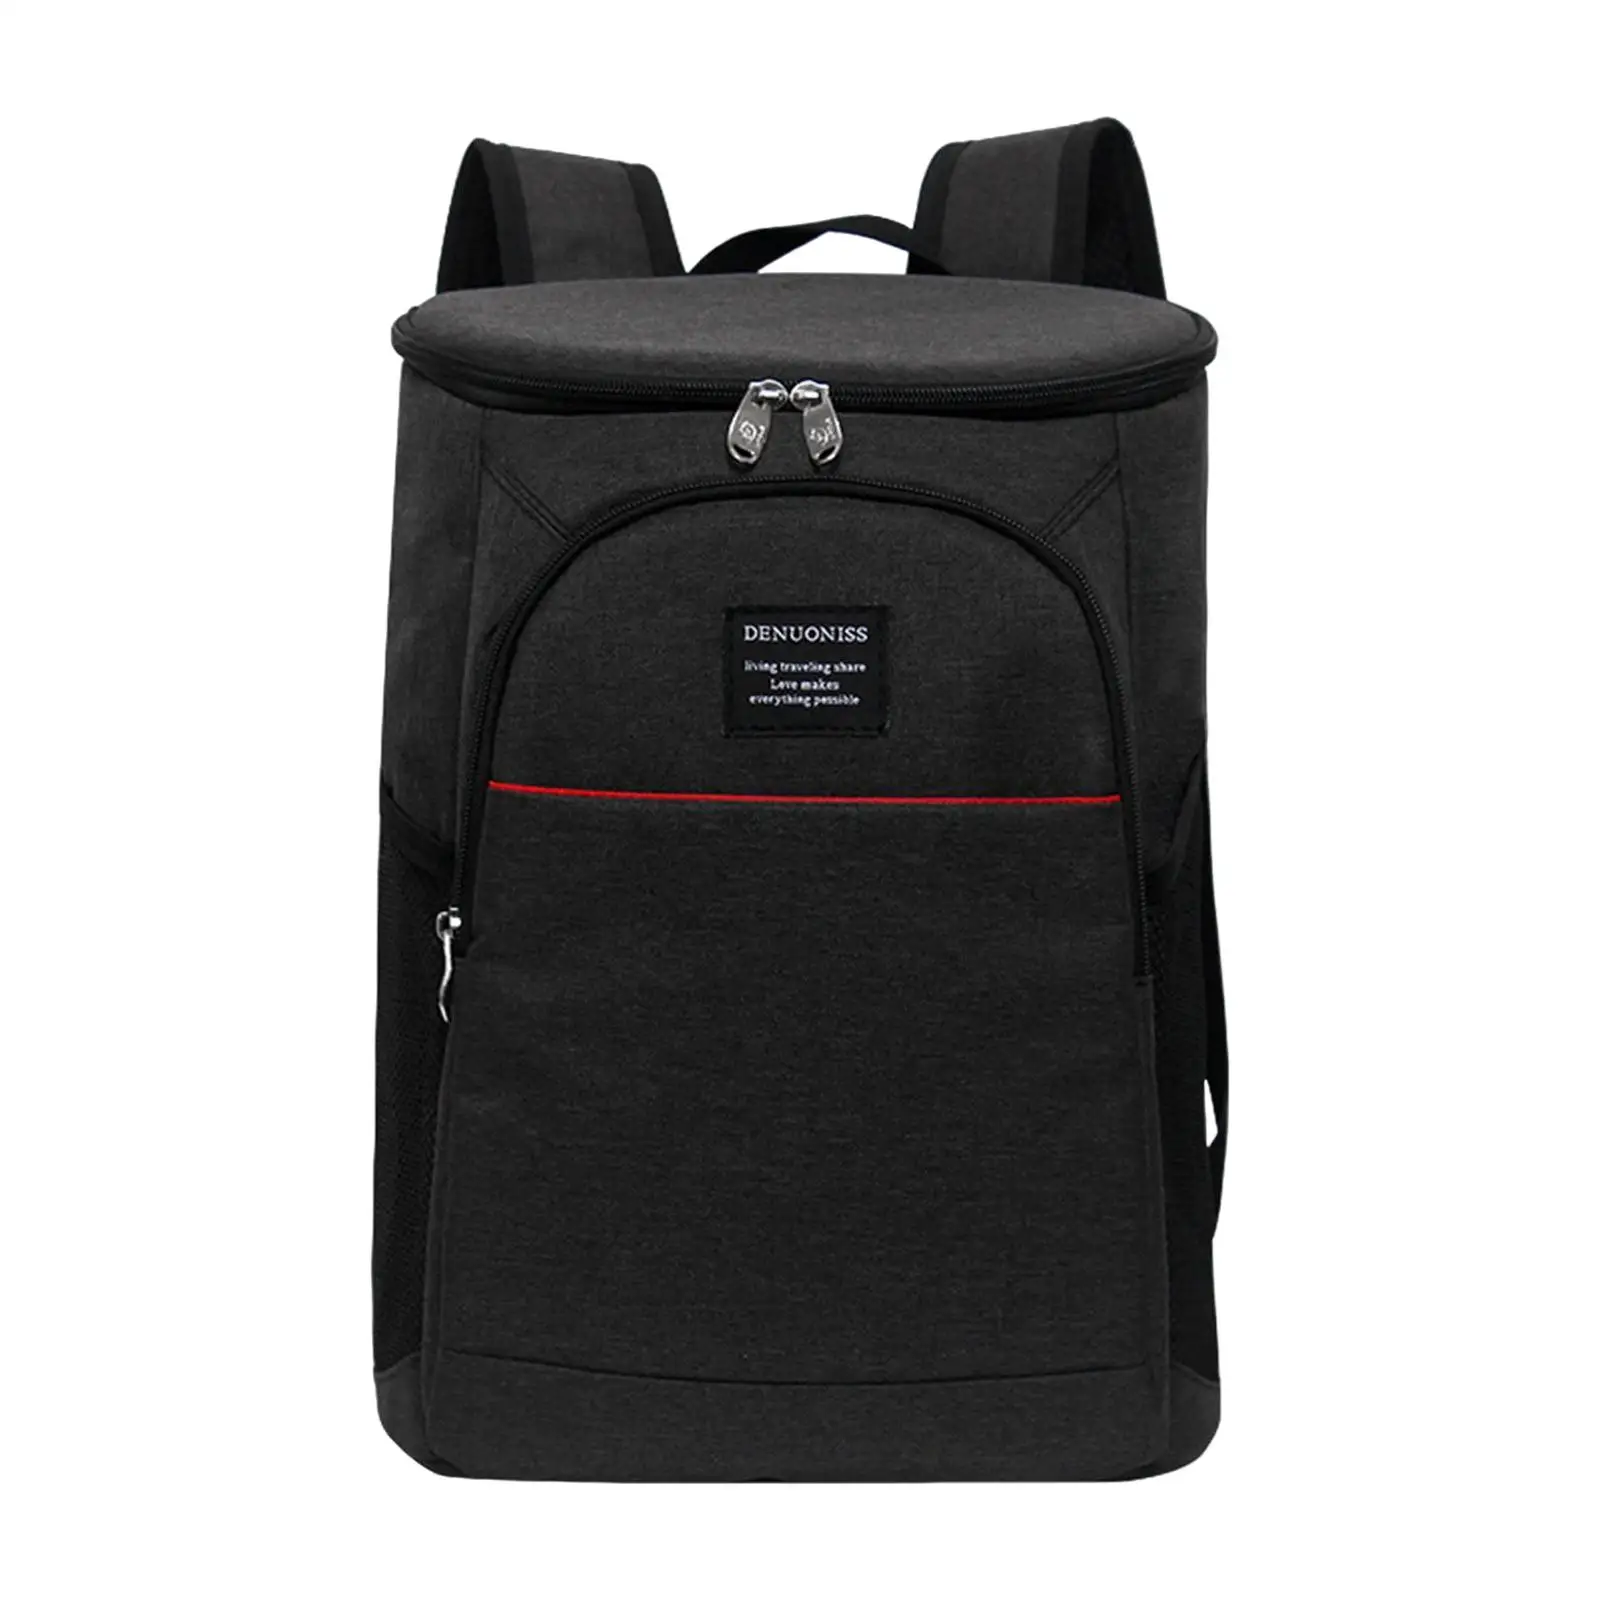 Backpack Cooler Lightweight Insulated Cooler Bag for Picnic Hiking Travel